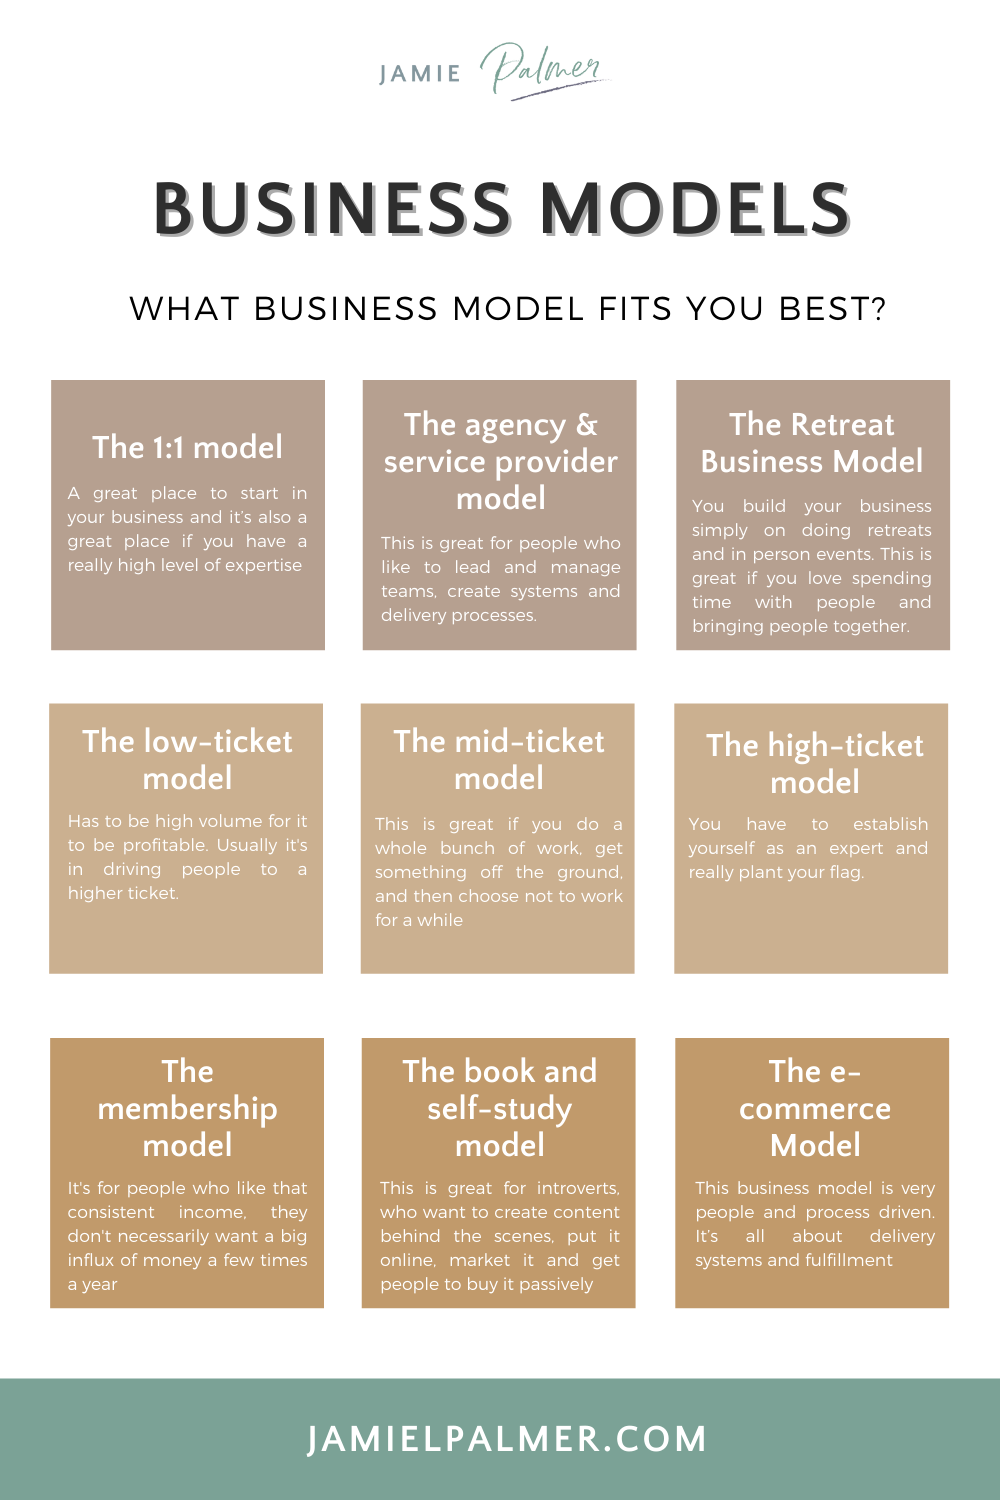 Business models 101